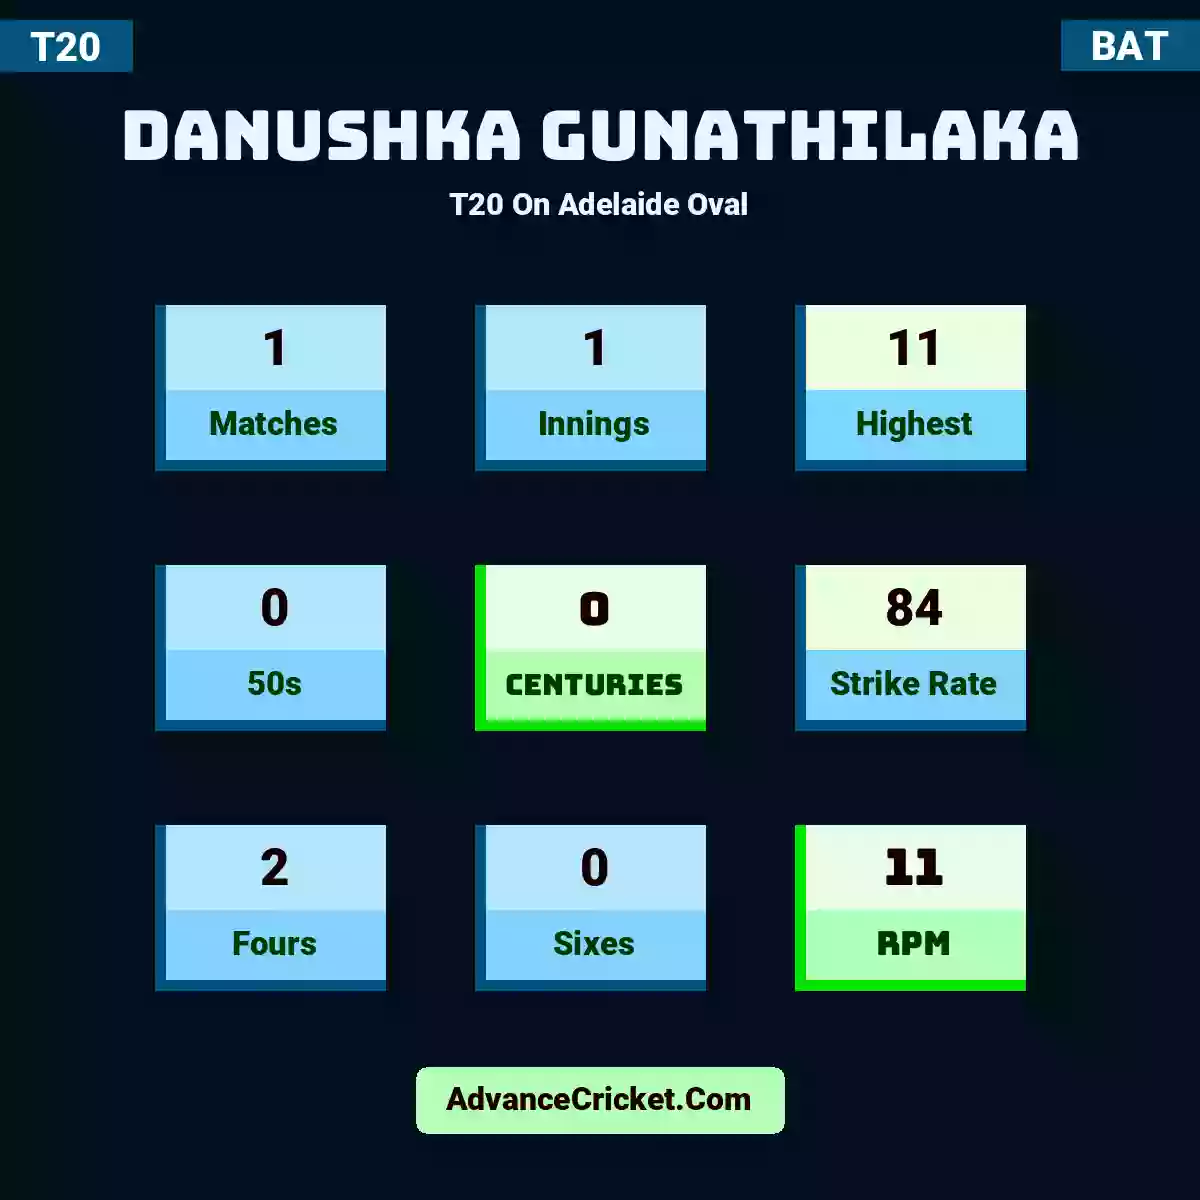 Danushka Gunathilaka T20  On Adelaide Oval, Danushka Gunathilaka played 1 matches, scored 11 runs as highest, 0 half-centuries, and 0 centuries, with a strike rate of 84. D.Gunathilaka hit 2 fours and 0 sixes, with an RPM of 11.